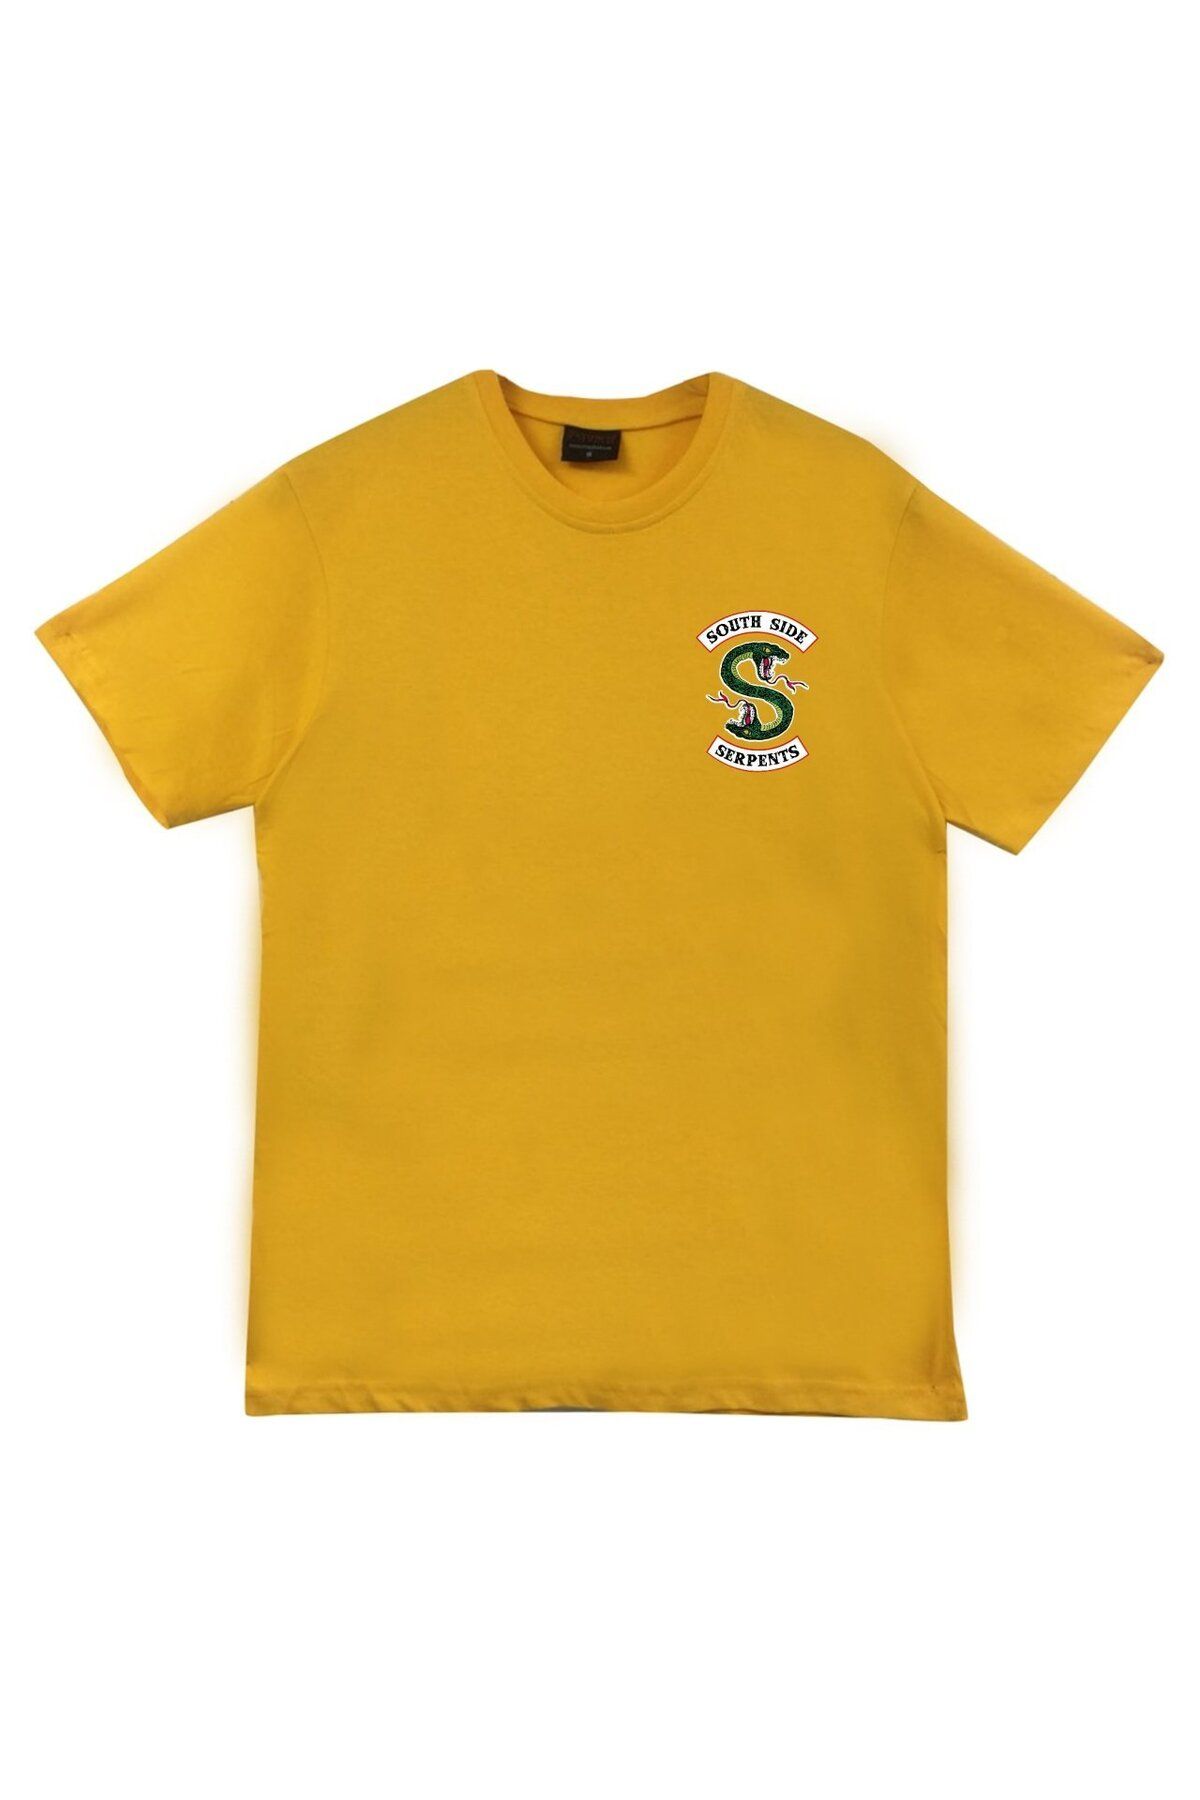 fame-stoned Unisex Sarı Riverdale Southside Serpents Baskılı T-shirt